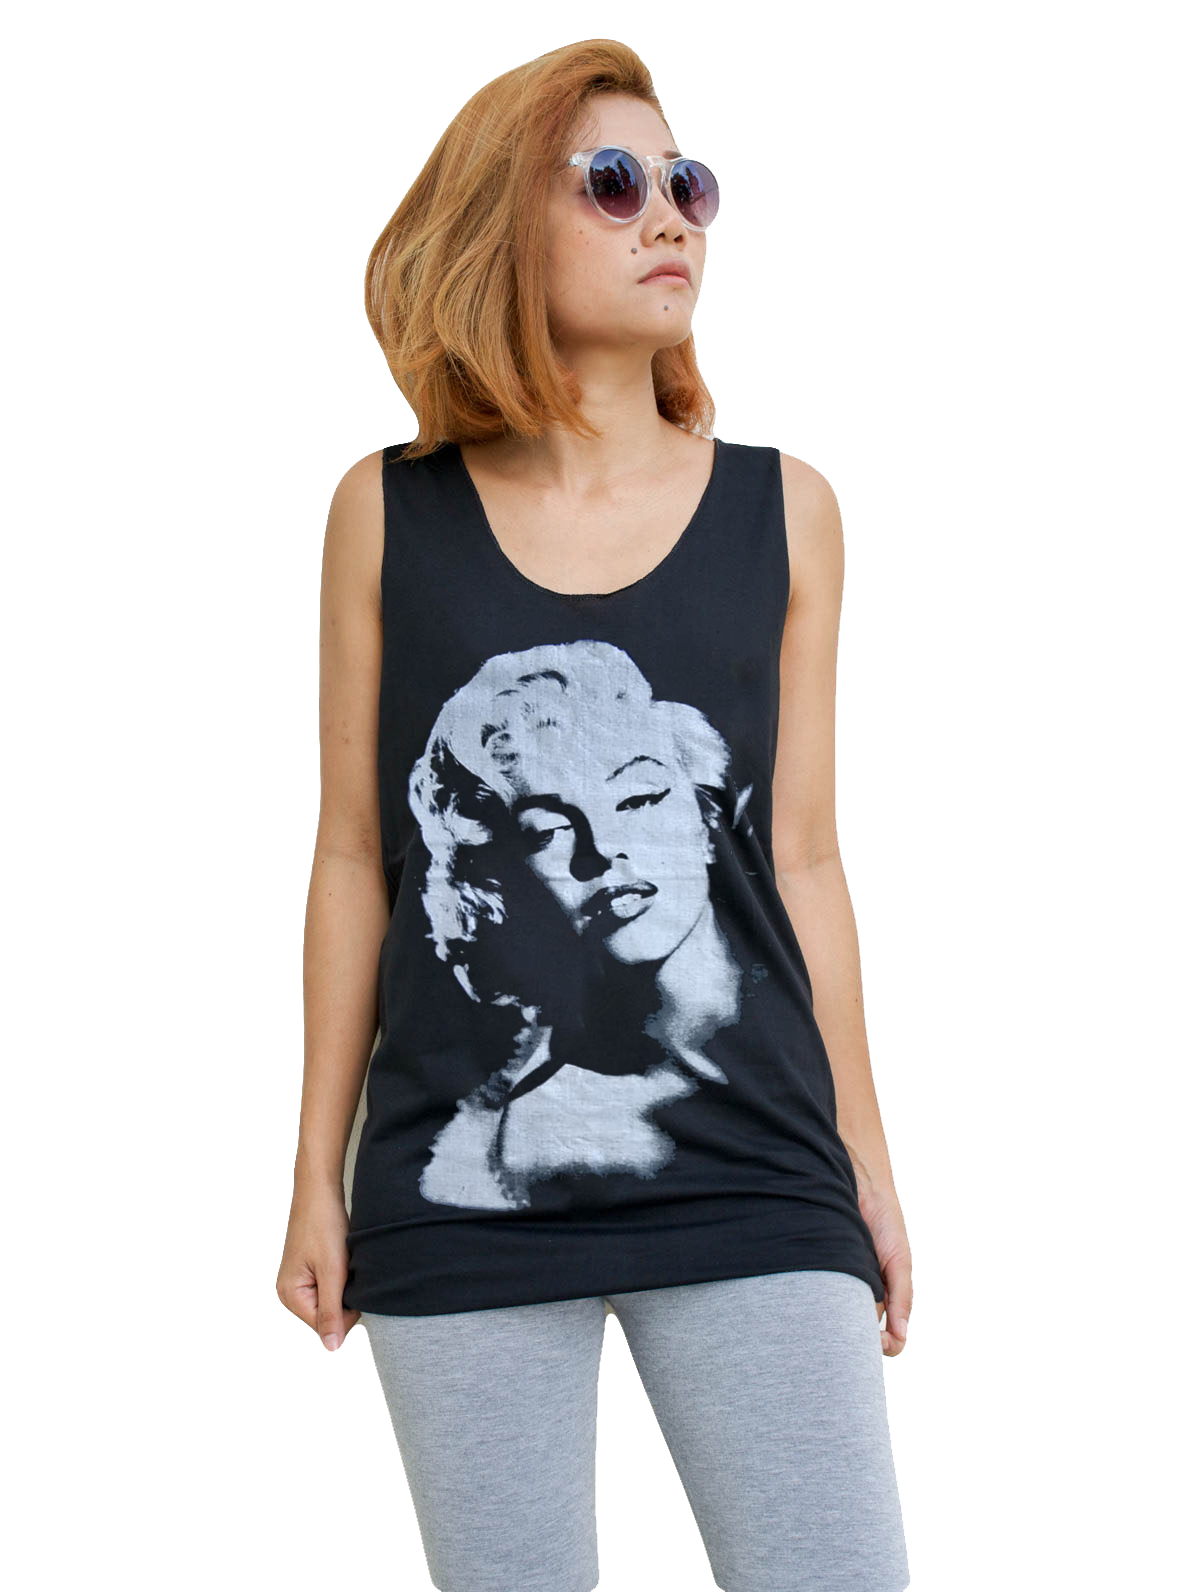 Unisex Marilyn Monroe Tank-Top Singlet vest Sleeveless T-shirt